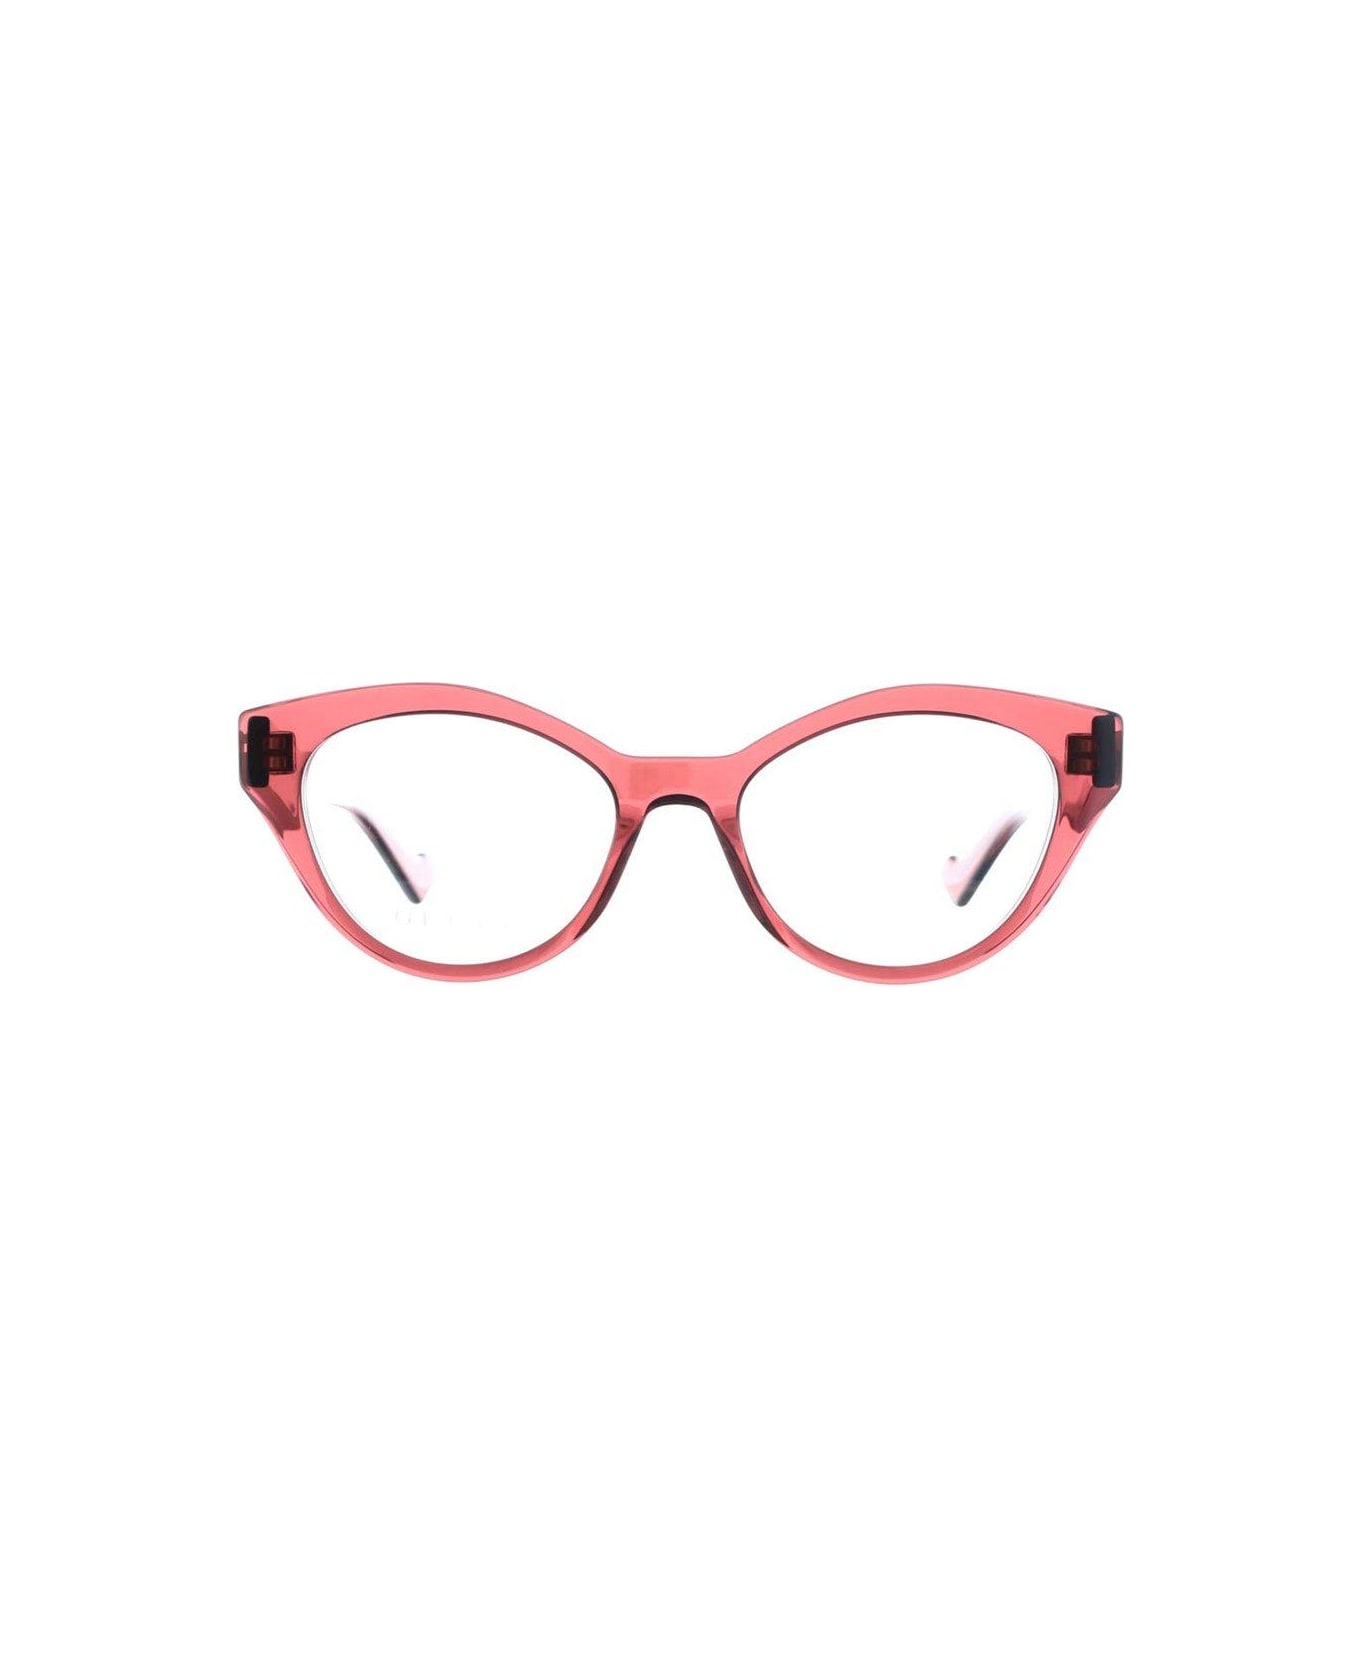 Gucci Eyewear Cat Eye Frame Glasses - 003 burgundy burgundy tra アイウェア